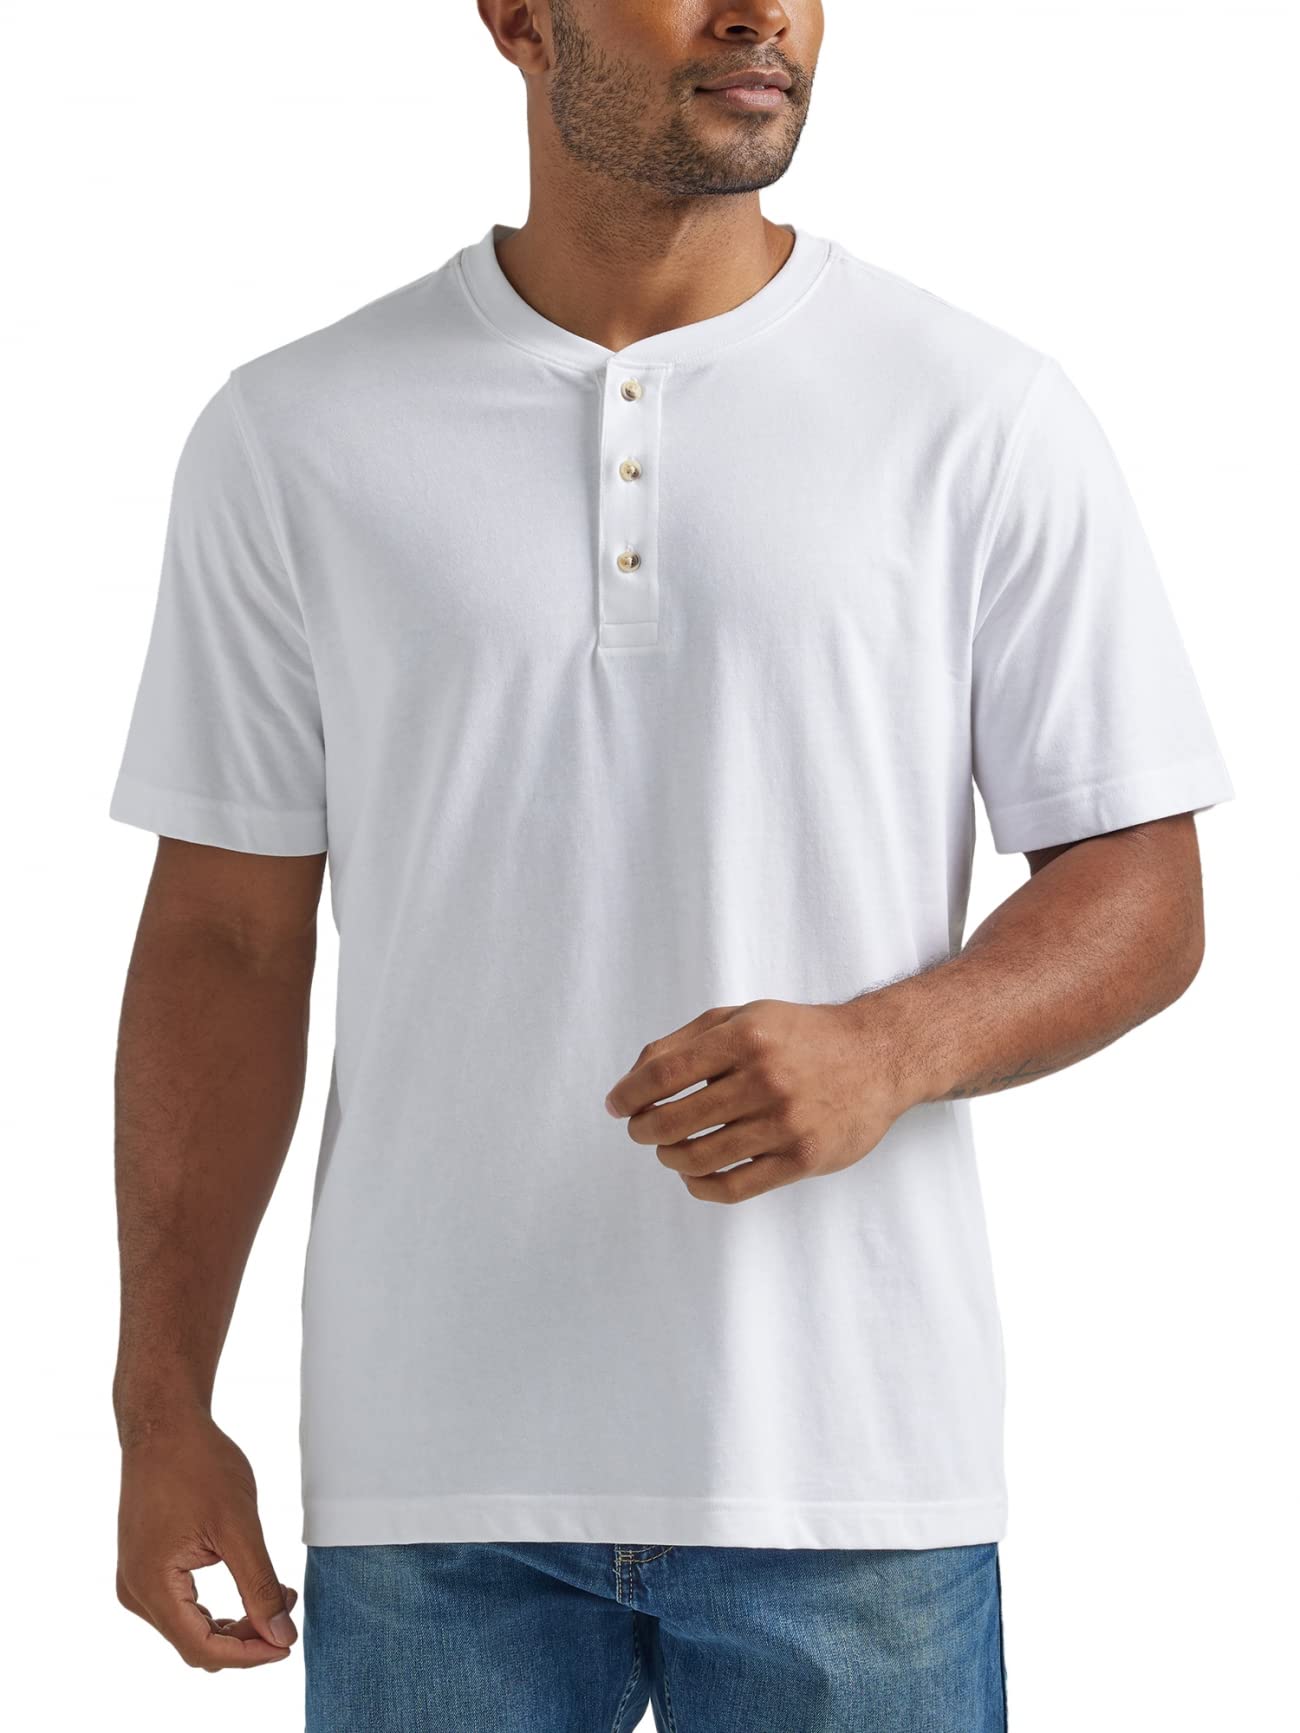 Wrangler Authentics Men's Short Sleeve Henley Tee, Bright White, X-Large